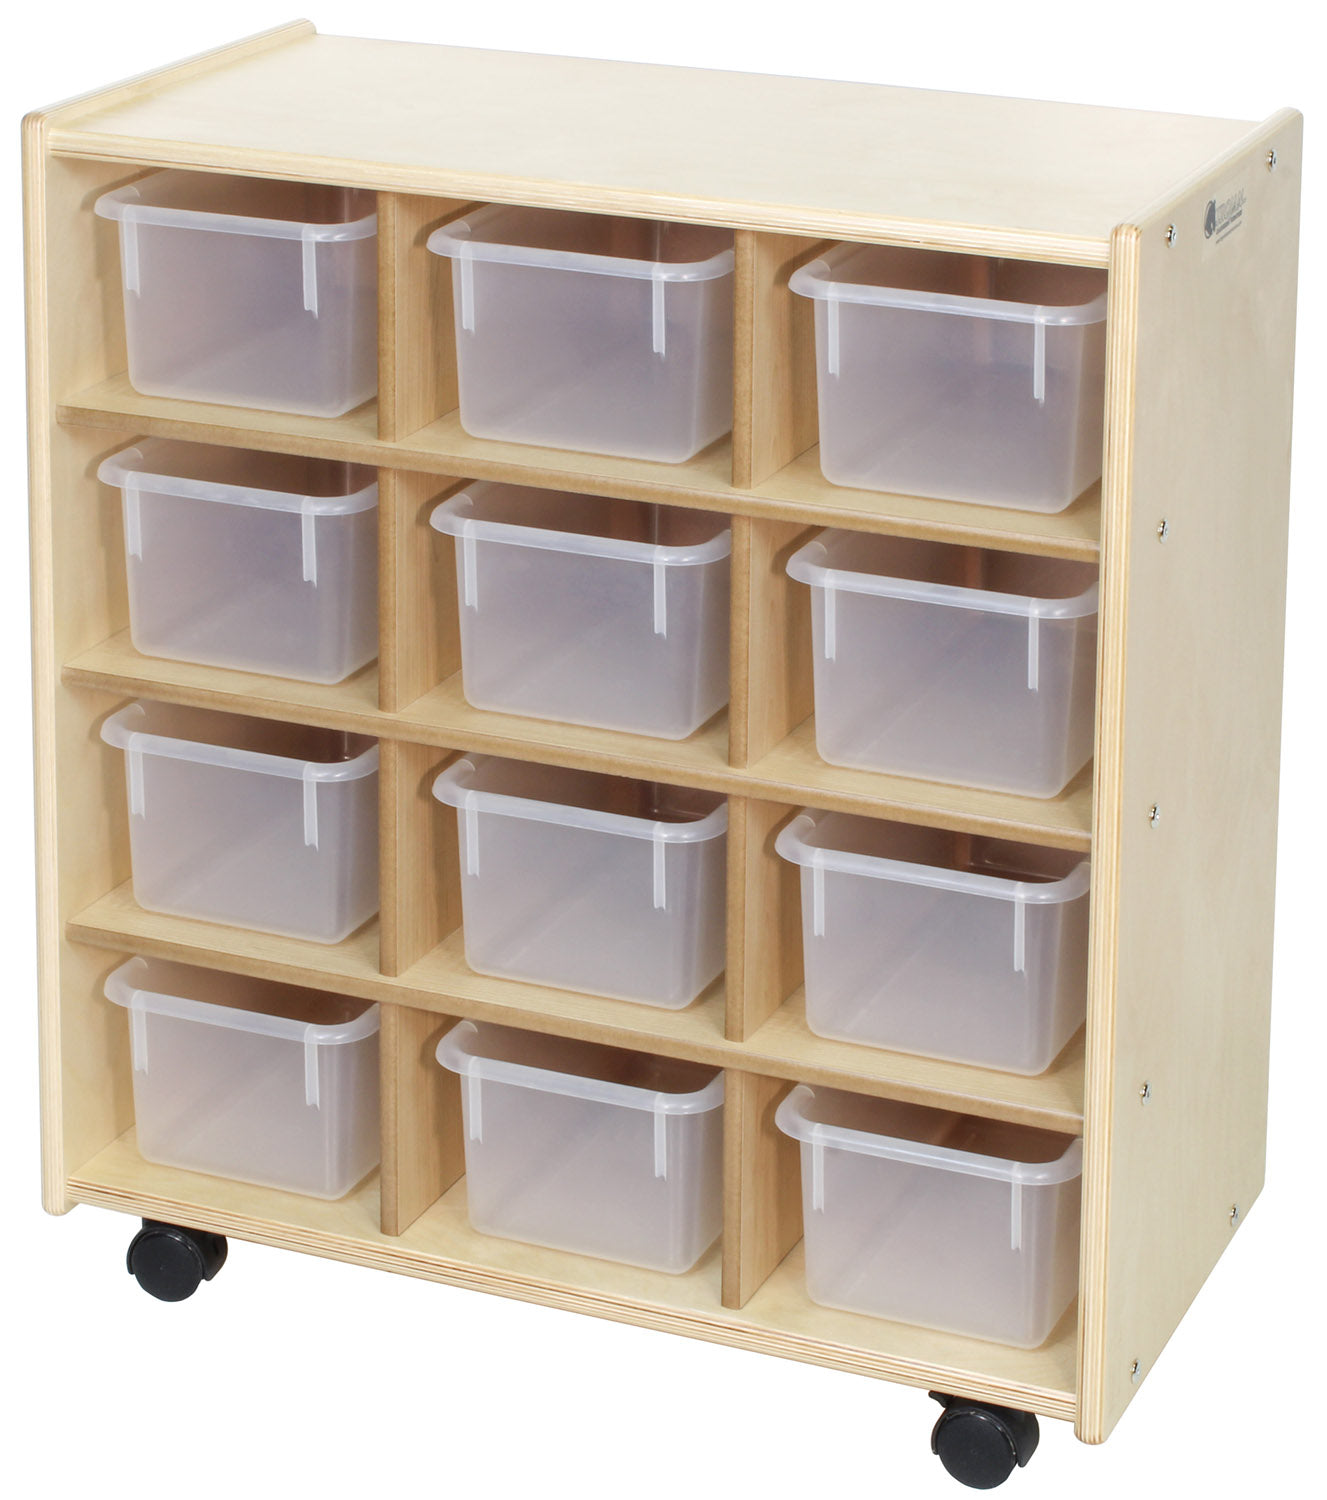 12 Small Bin Storage Unit (Bins Sold Separately)